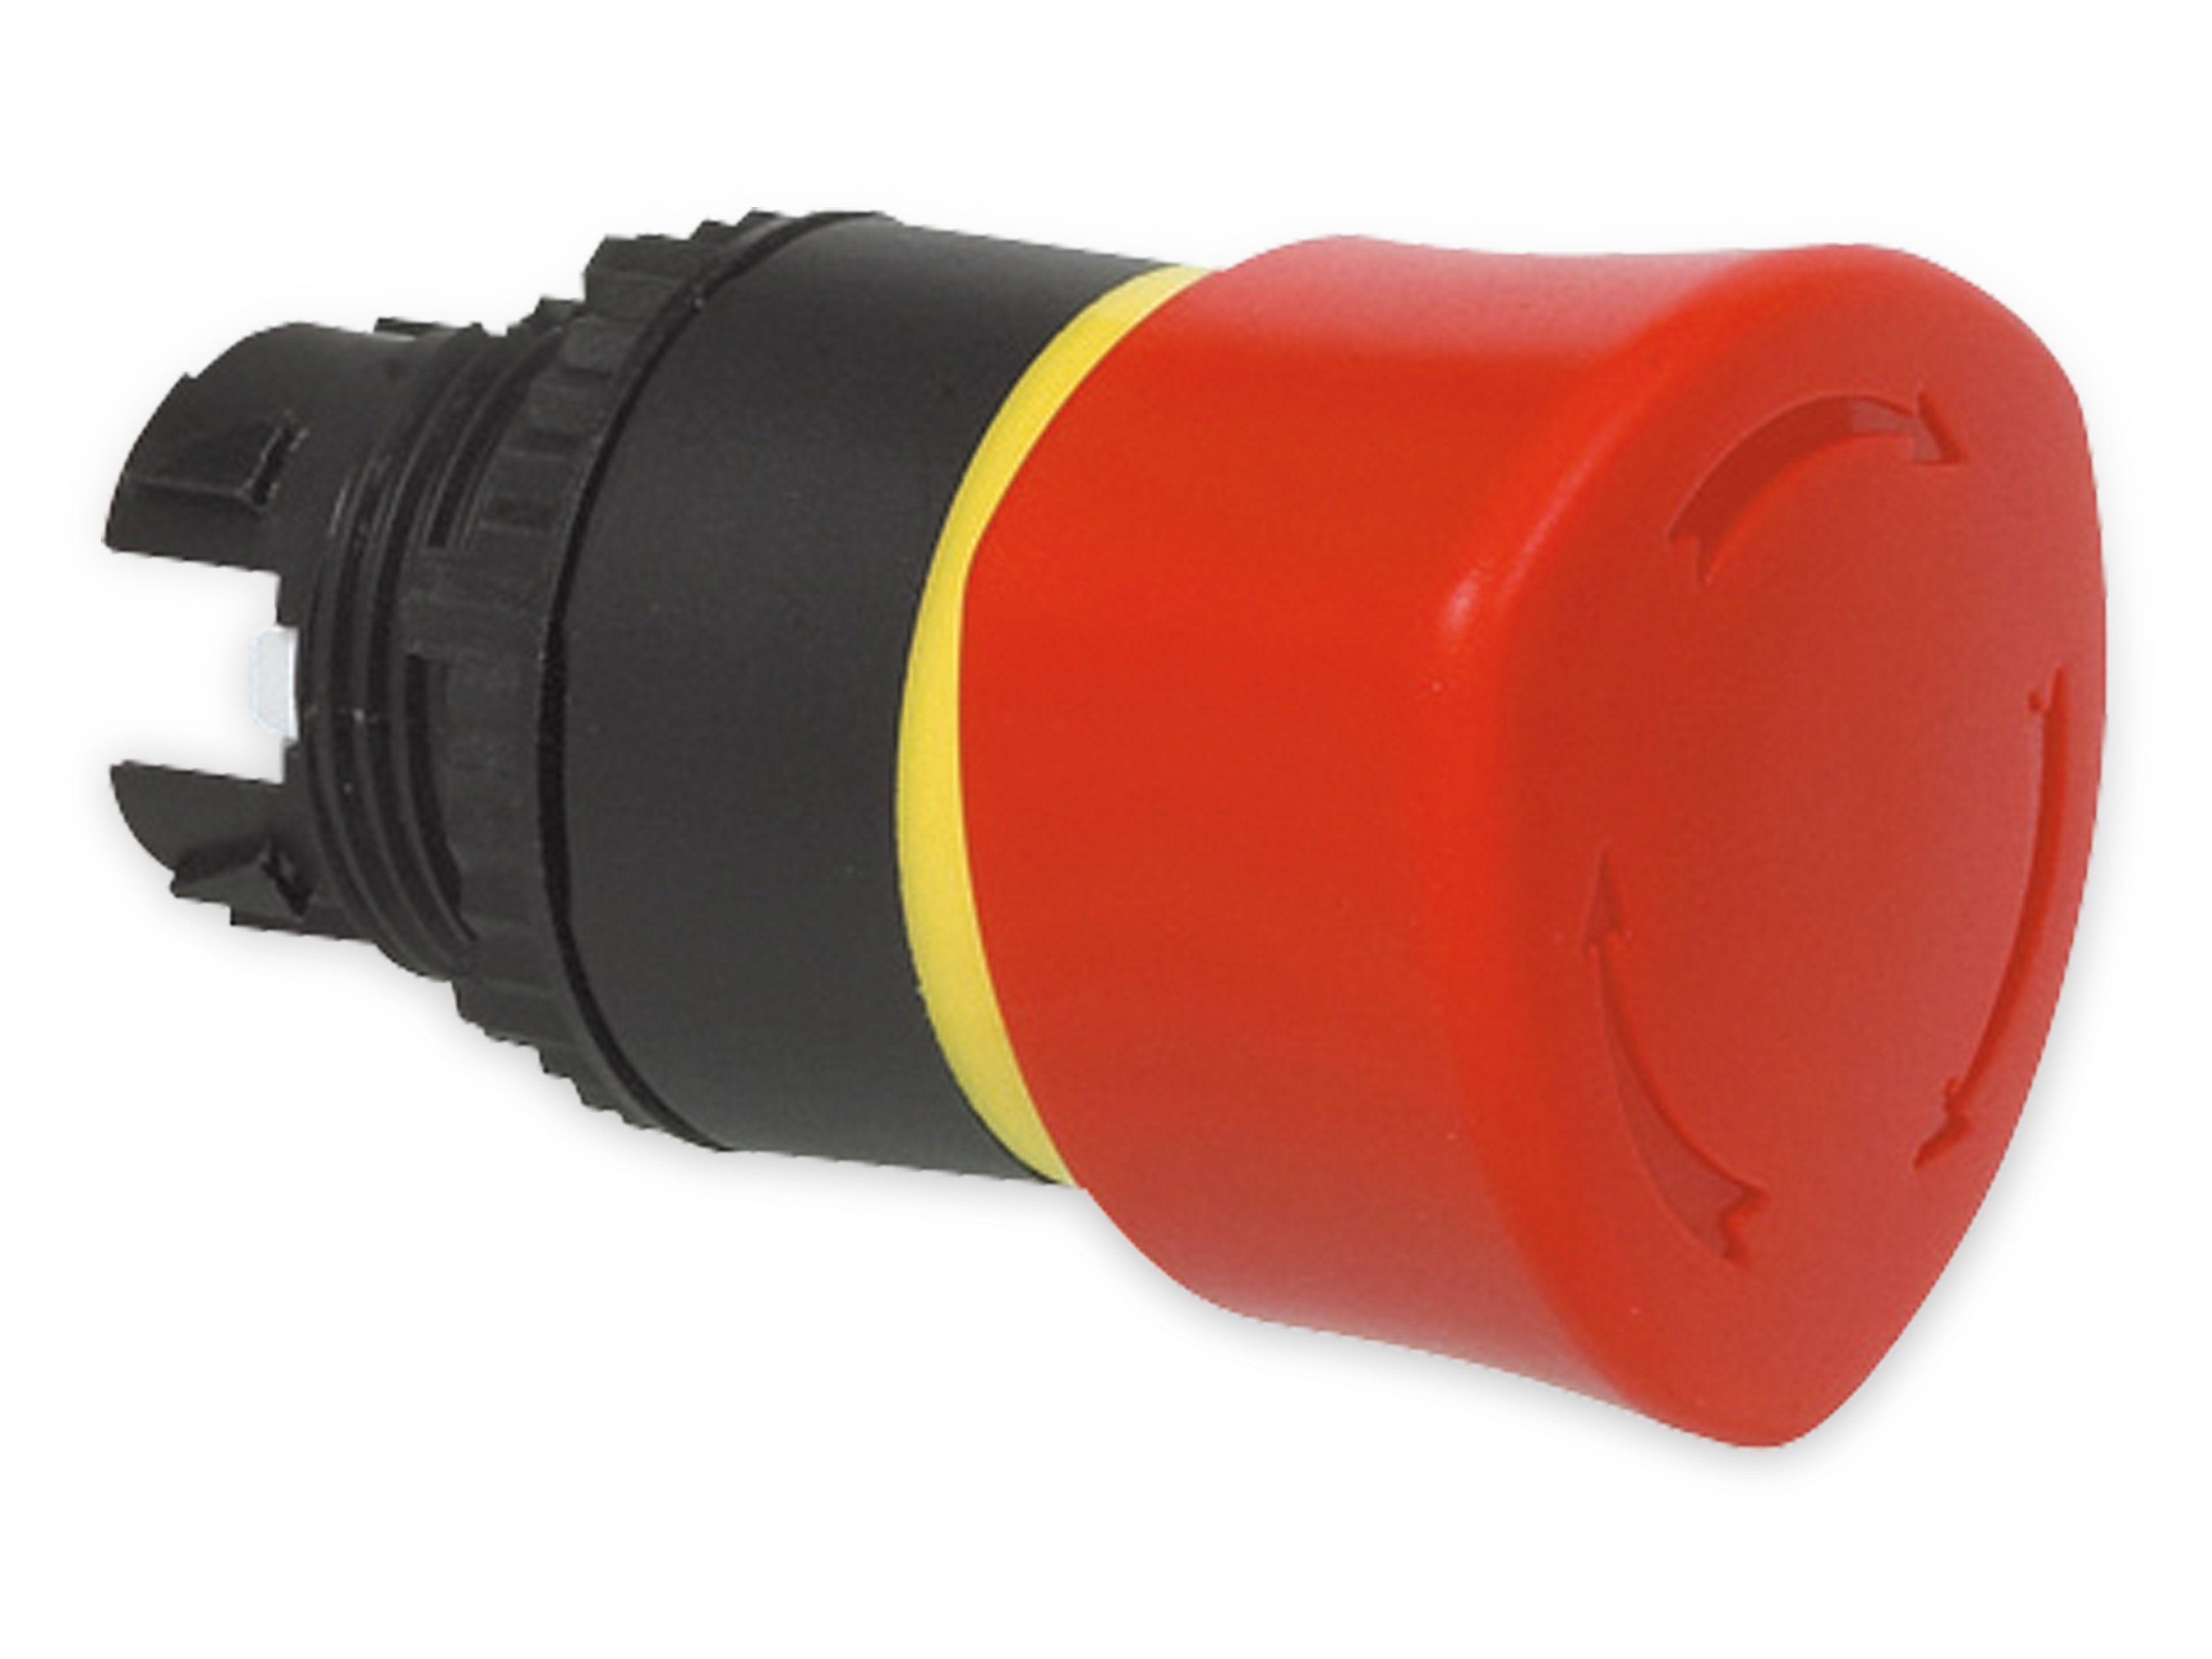 BACO Befehls-und Meldegeräte, L22ER01, Not-Halt-Taster, Drehentriegelung, rot/gelber Ring , 22 mm